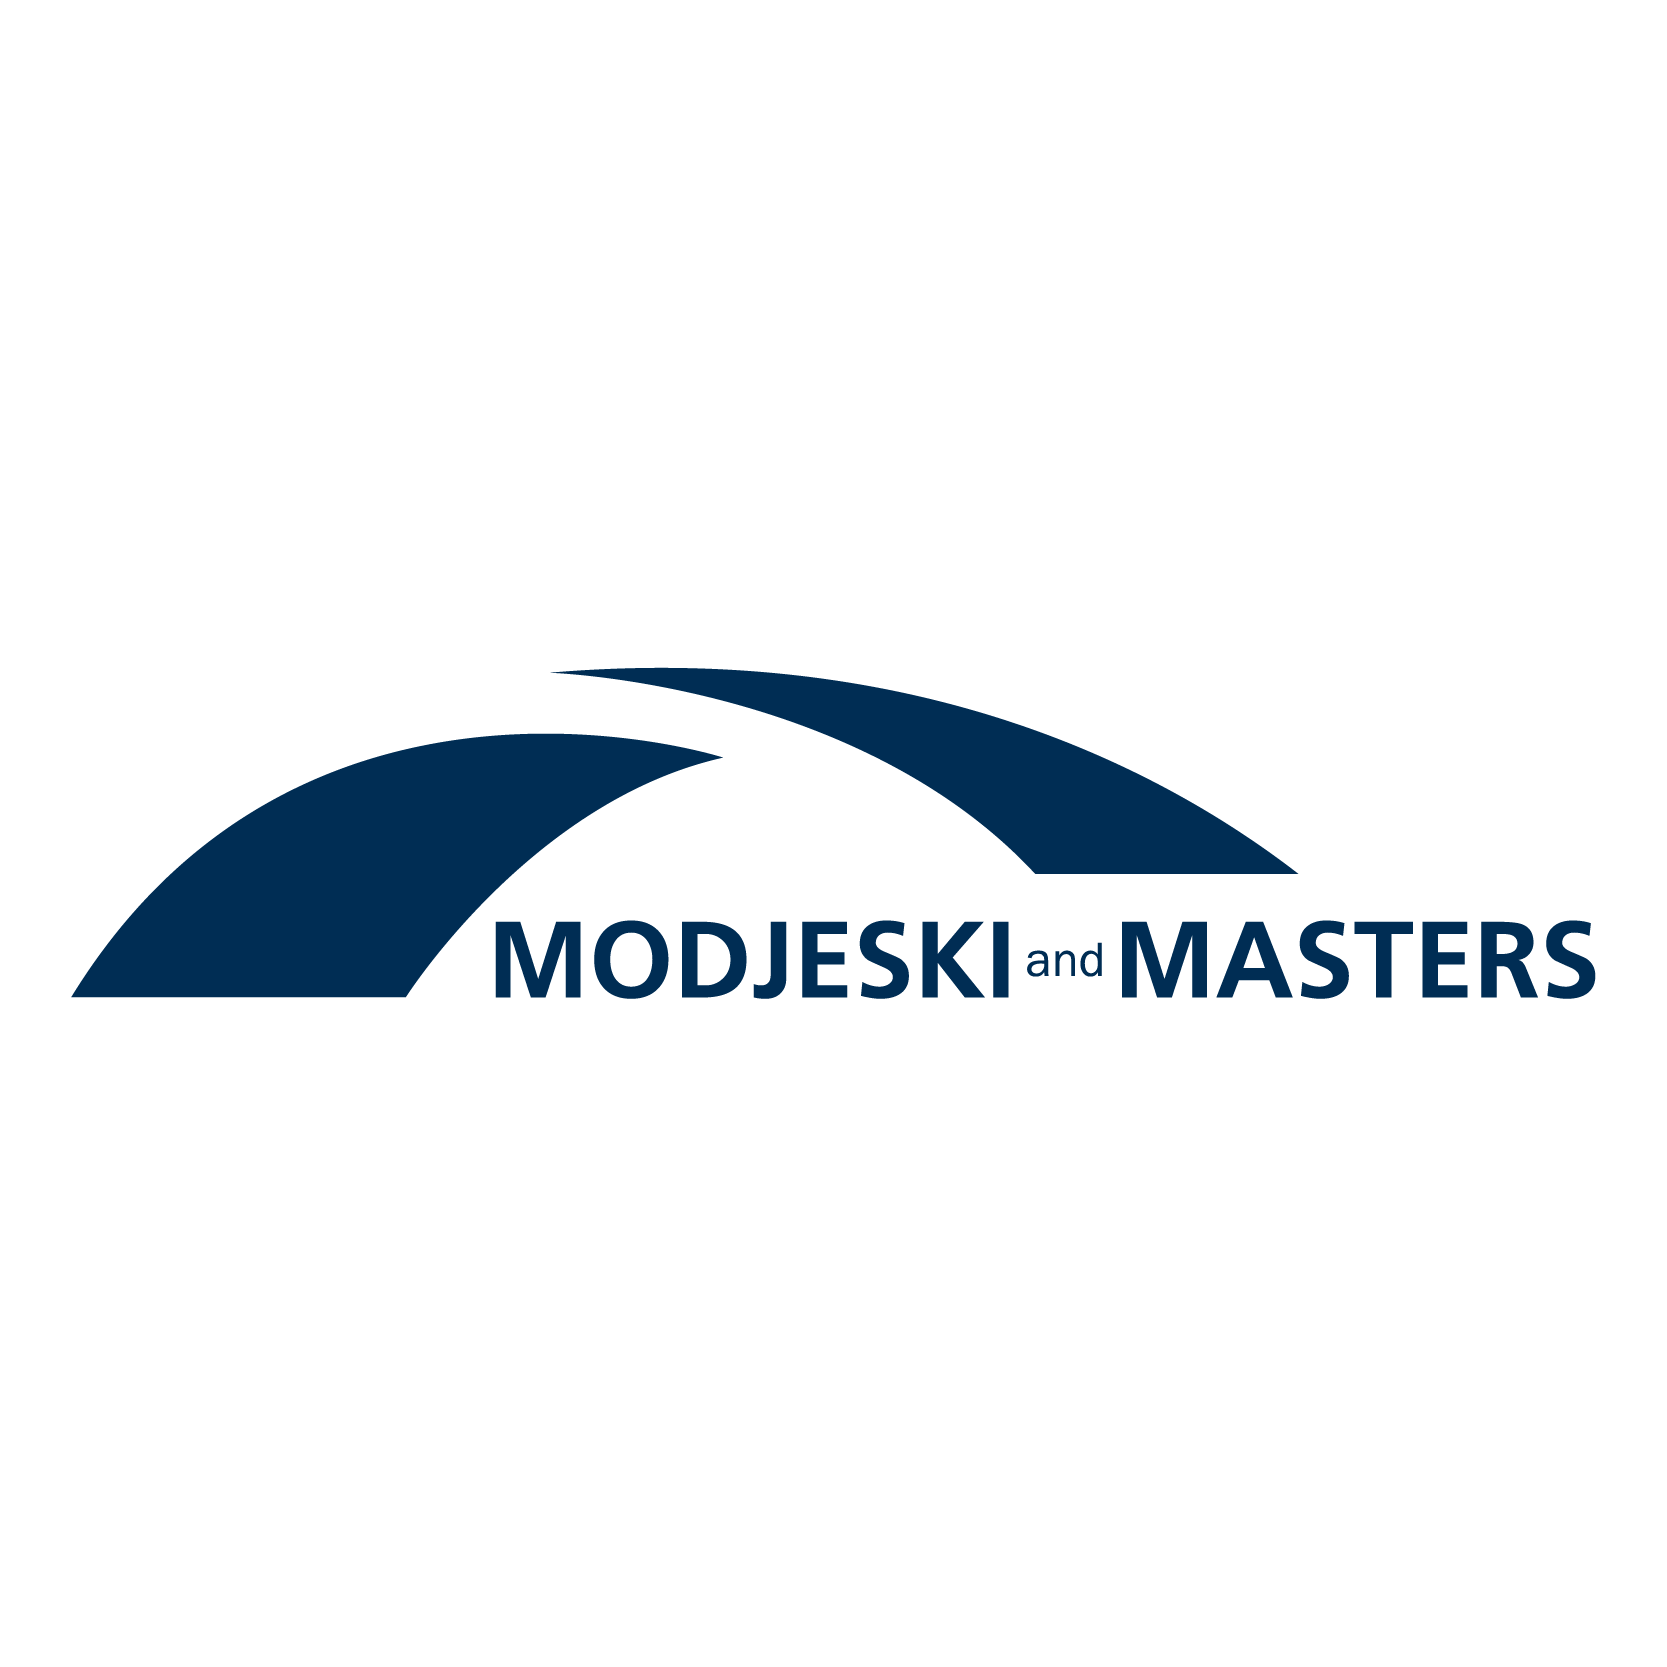 Modjeski and Masters to Design I Street Bridge’s Movable Span